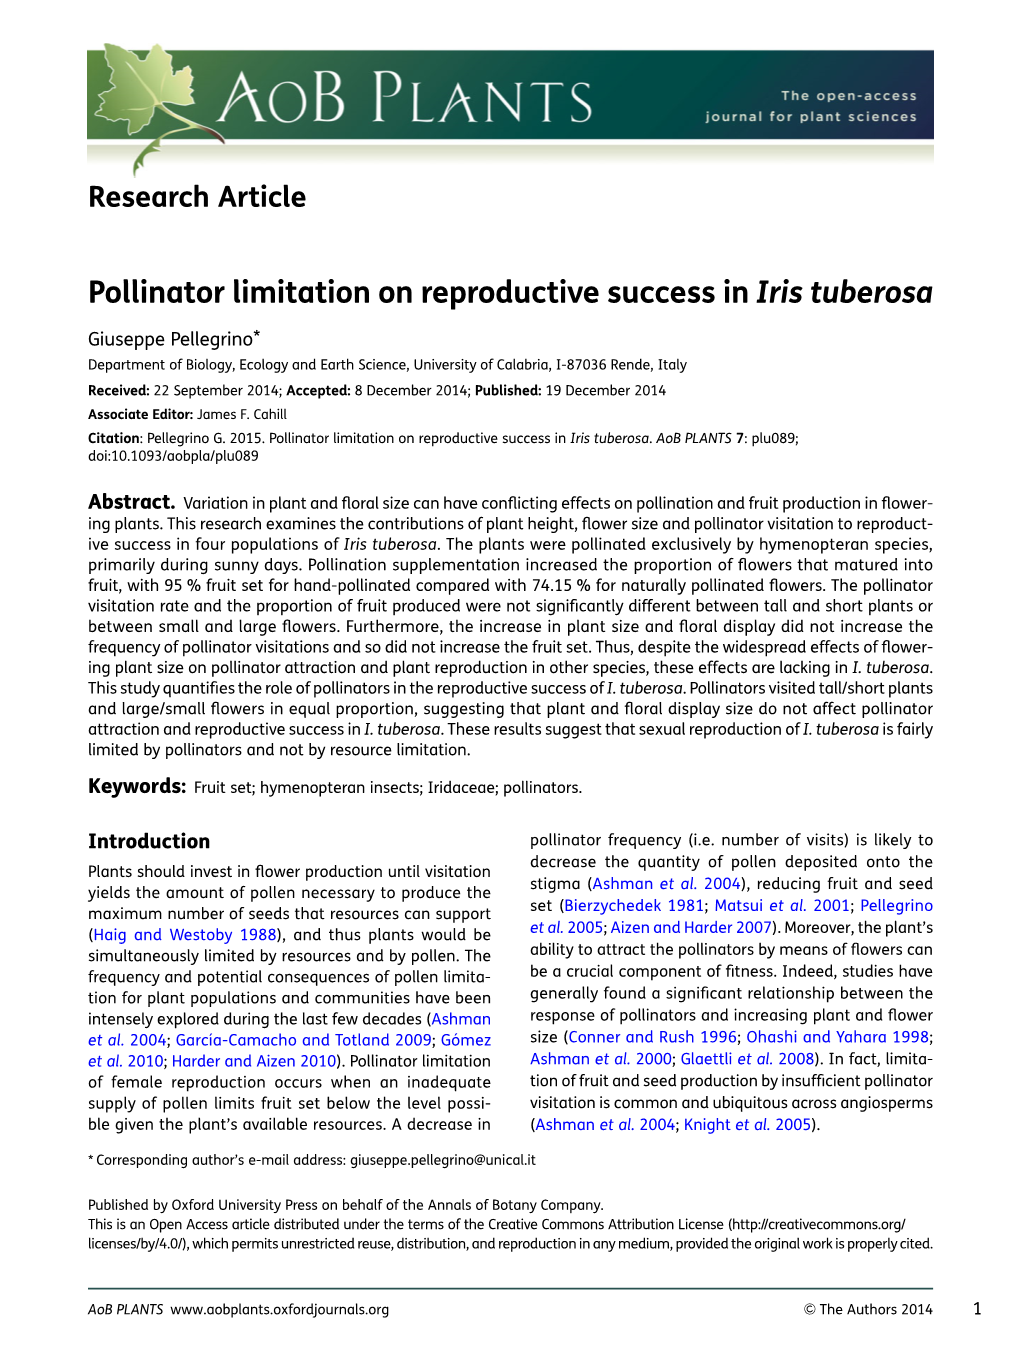 Pollinator Limitation on Reproductive Success in Iris Tuberosa